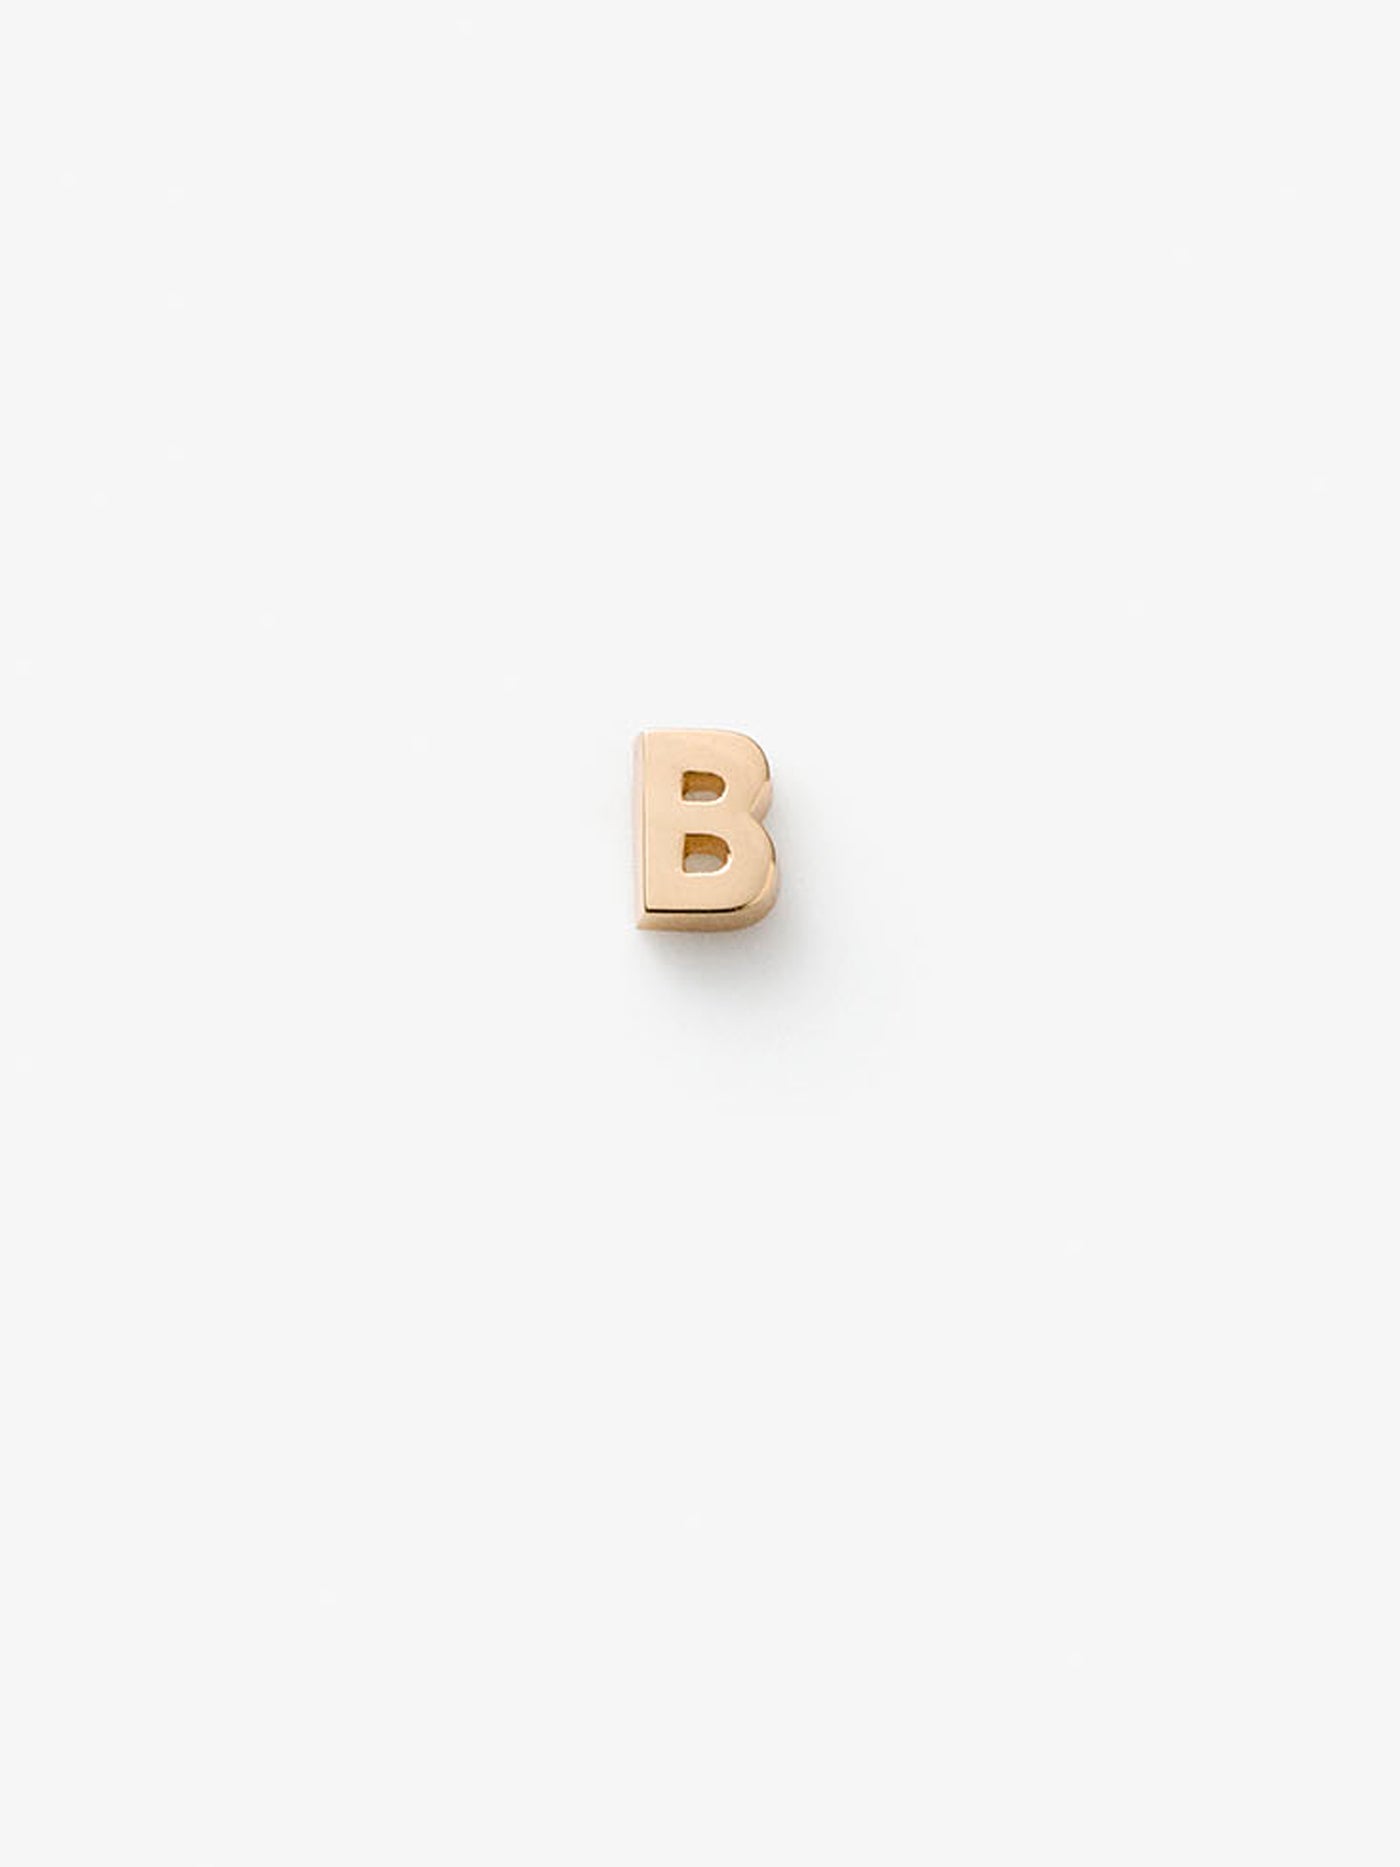 Miniature letter B single stud earring in 18k solid gold with a butterfly fastening for pierced ears. 